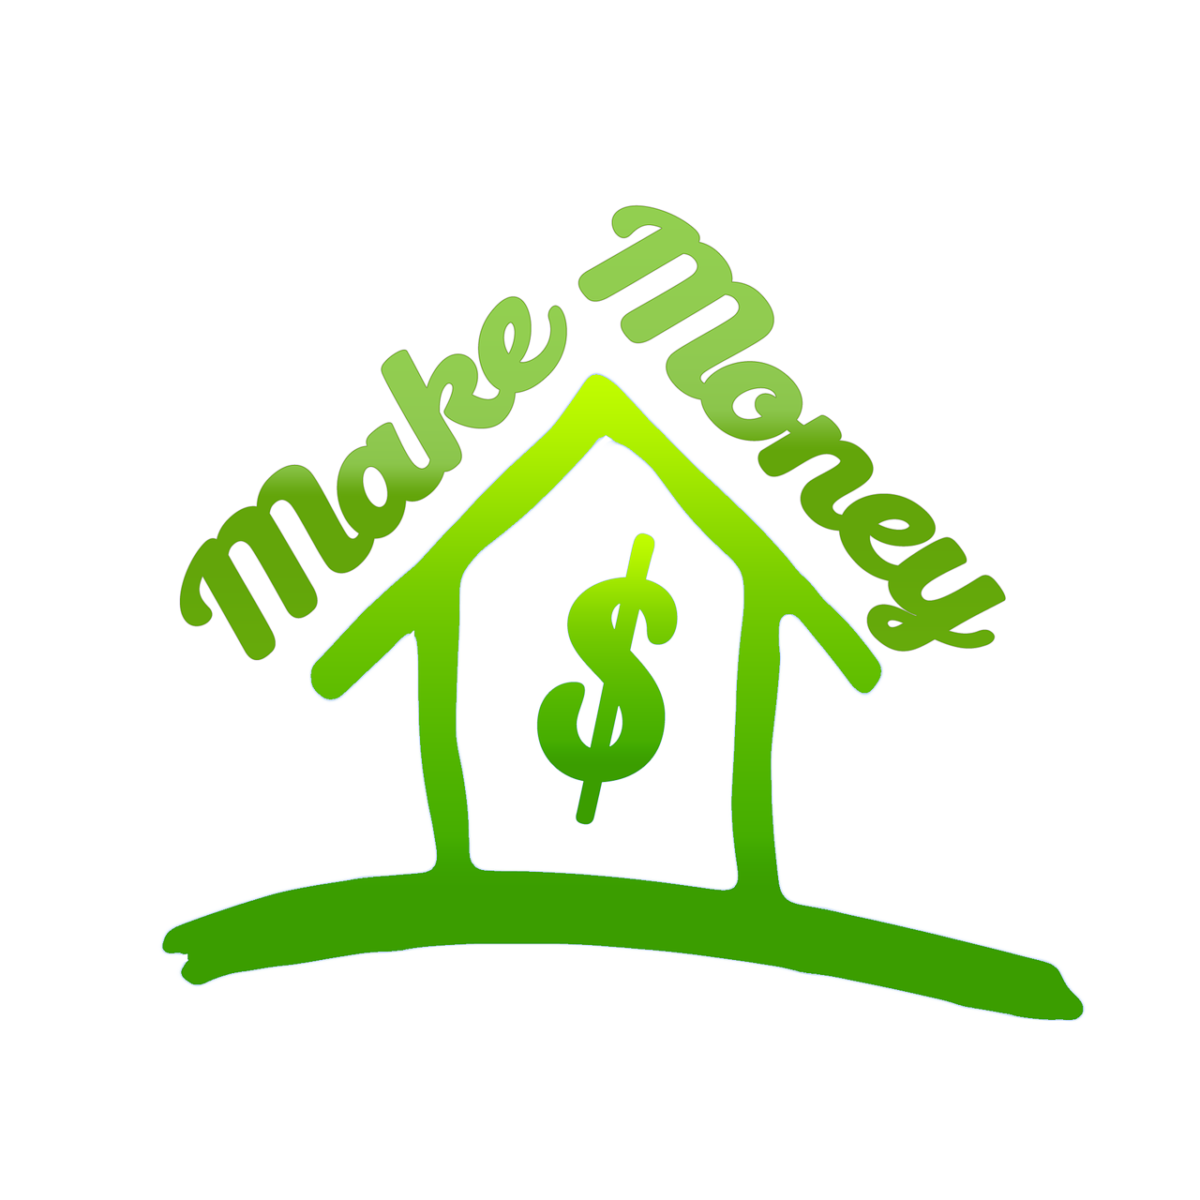 money Gerd Altmann en Pixabay